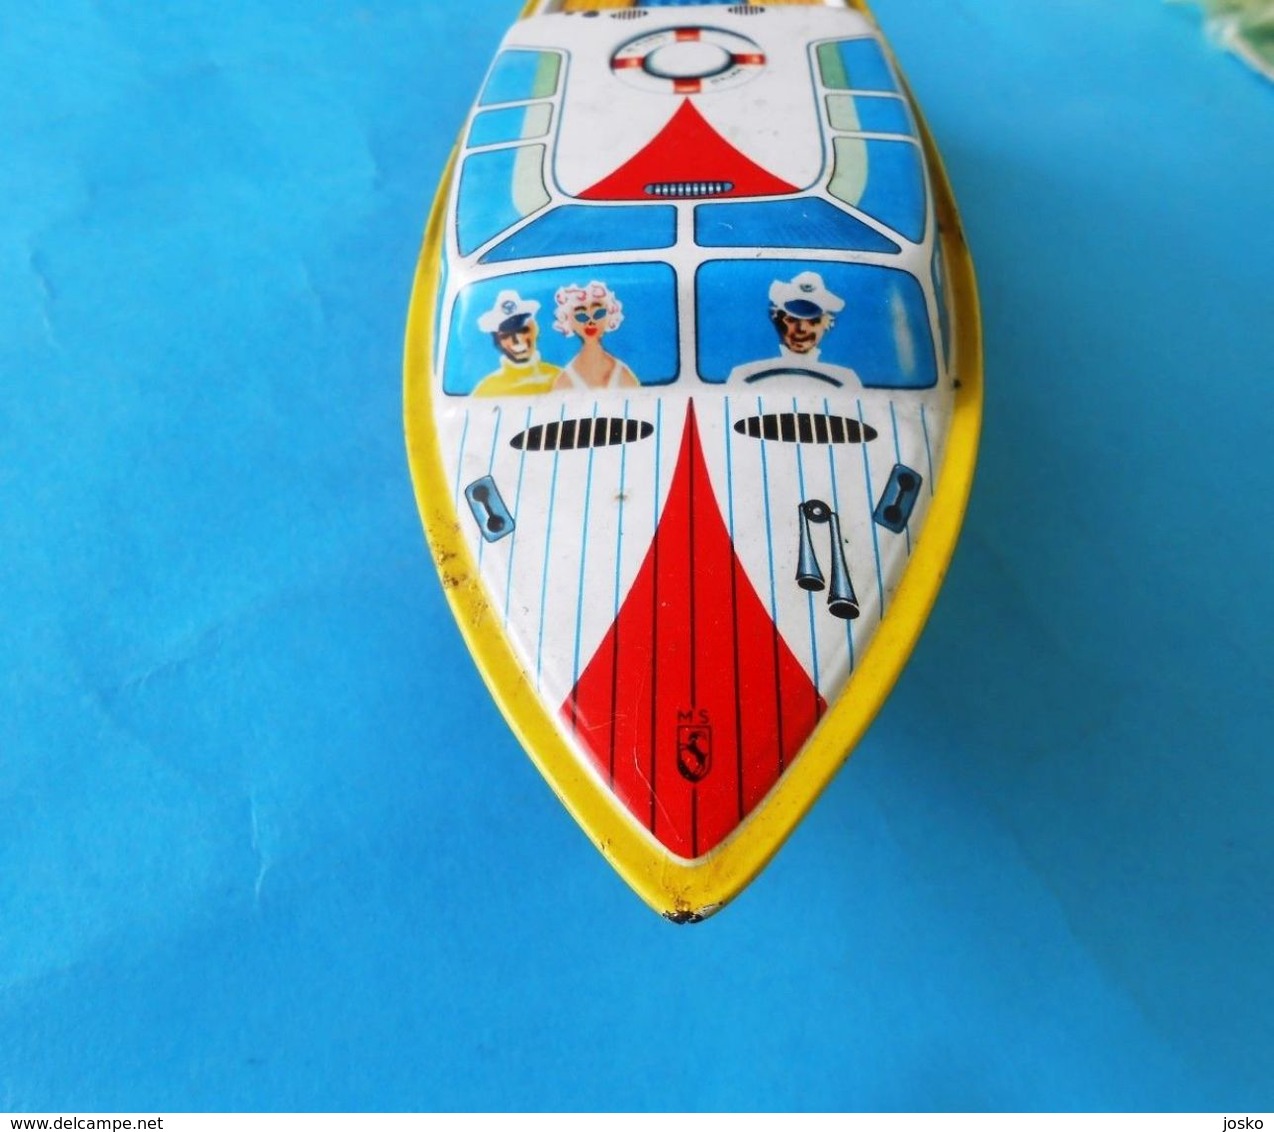 BOAT lithographed wind-up metal tin toy ( Made in West Germany ) original vintage * ship bateau jep en tole Deutschland